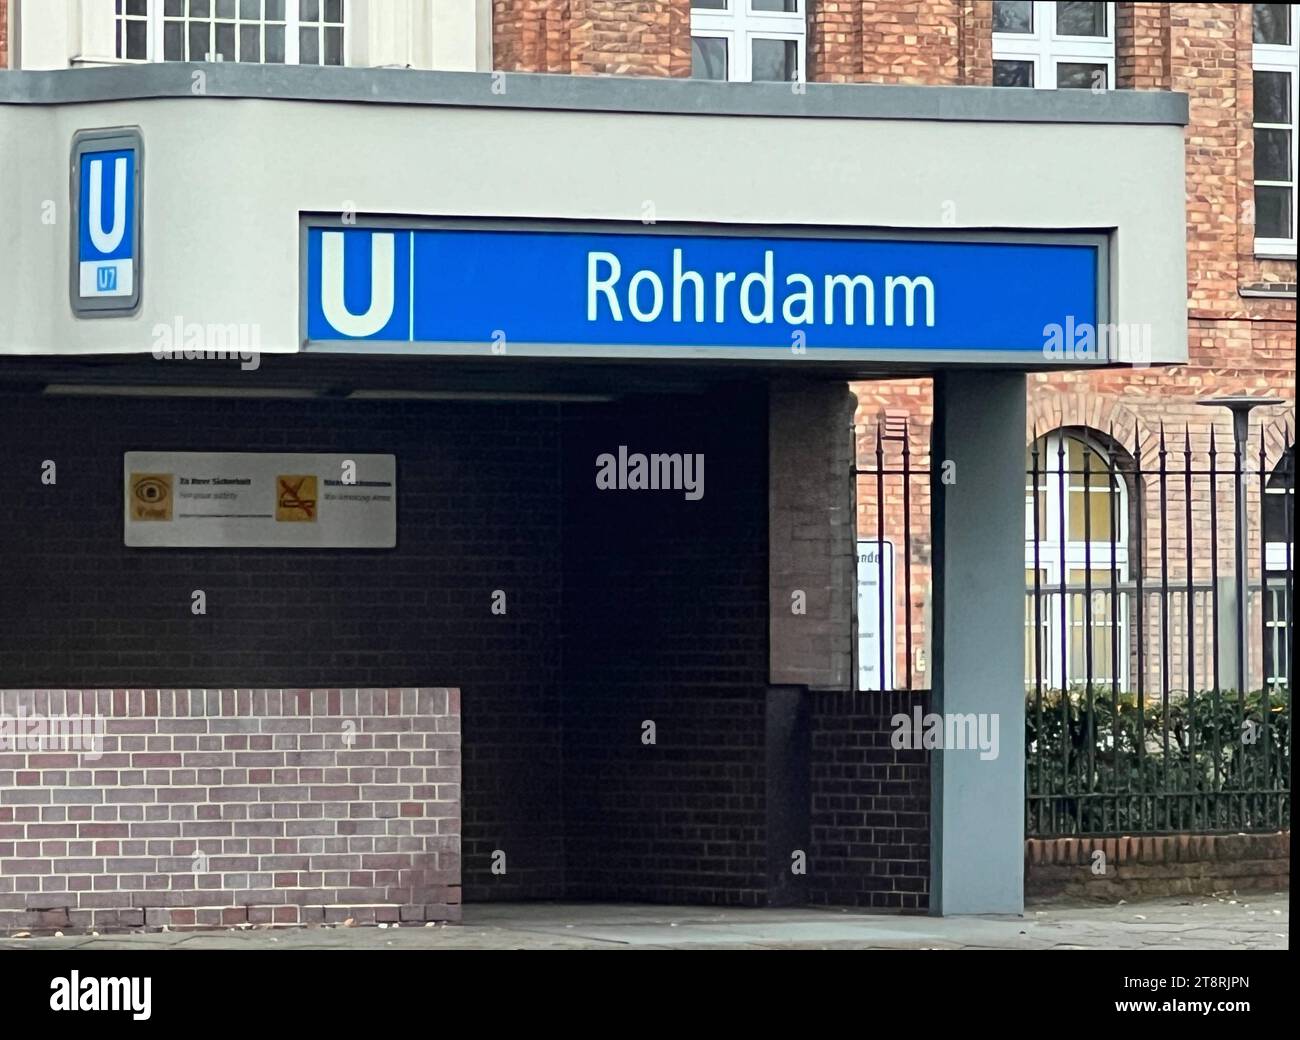 Berliner U-Bahnhof Rohrdamm U7 *** stazione della metropolitana di Berlino Rohrdamm U7 Copyright: Xmix1x credito: Imago/Alamy Live News Foto Stock